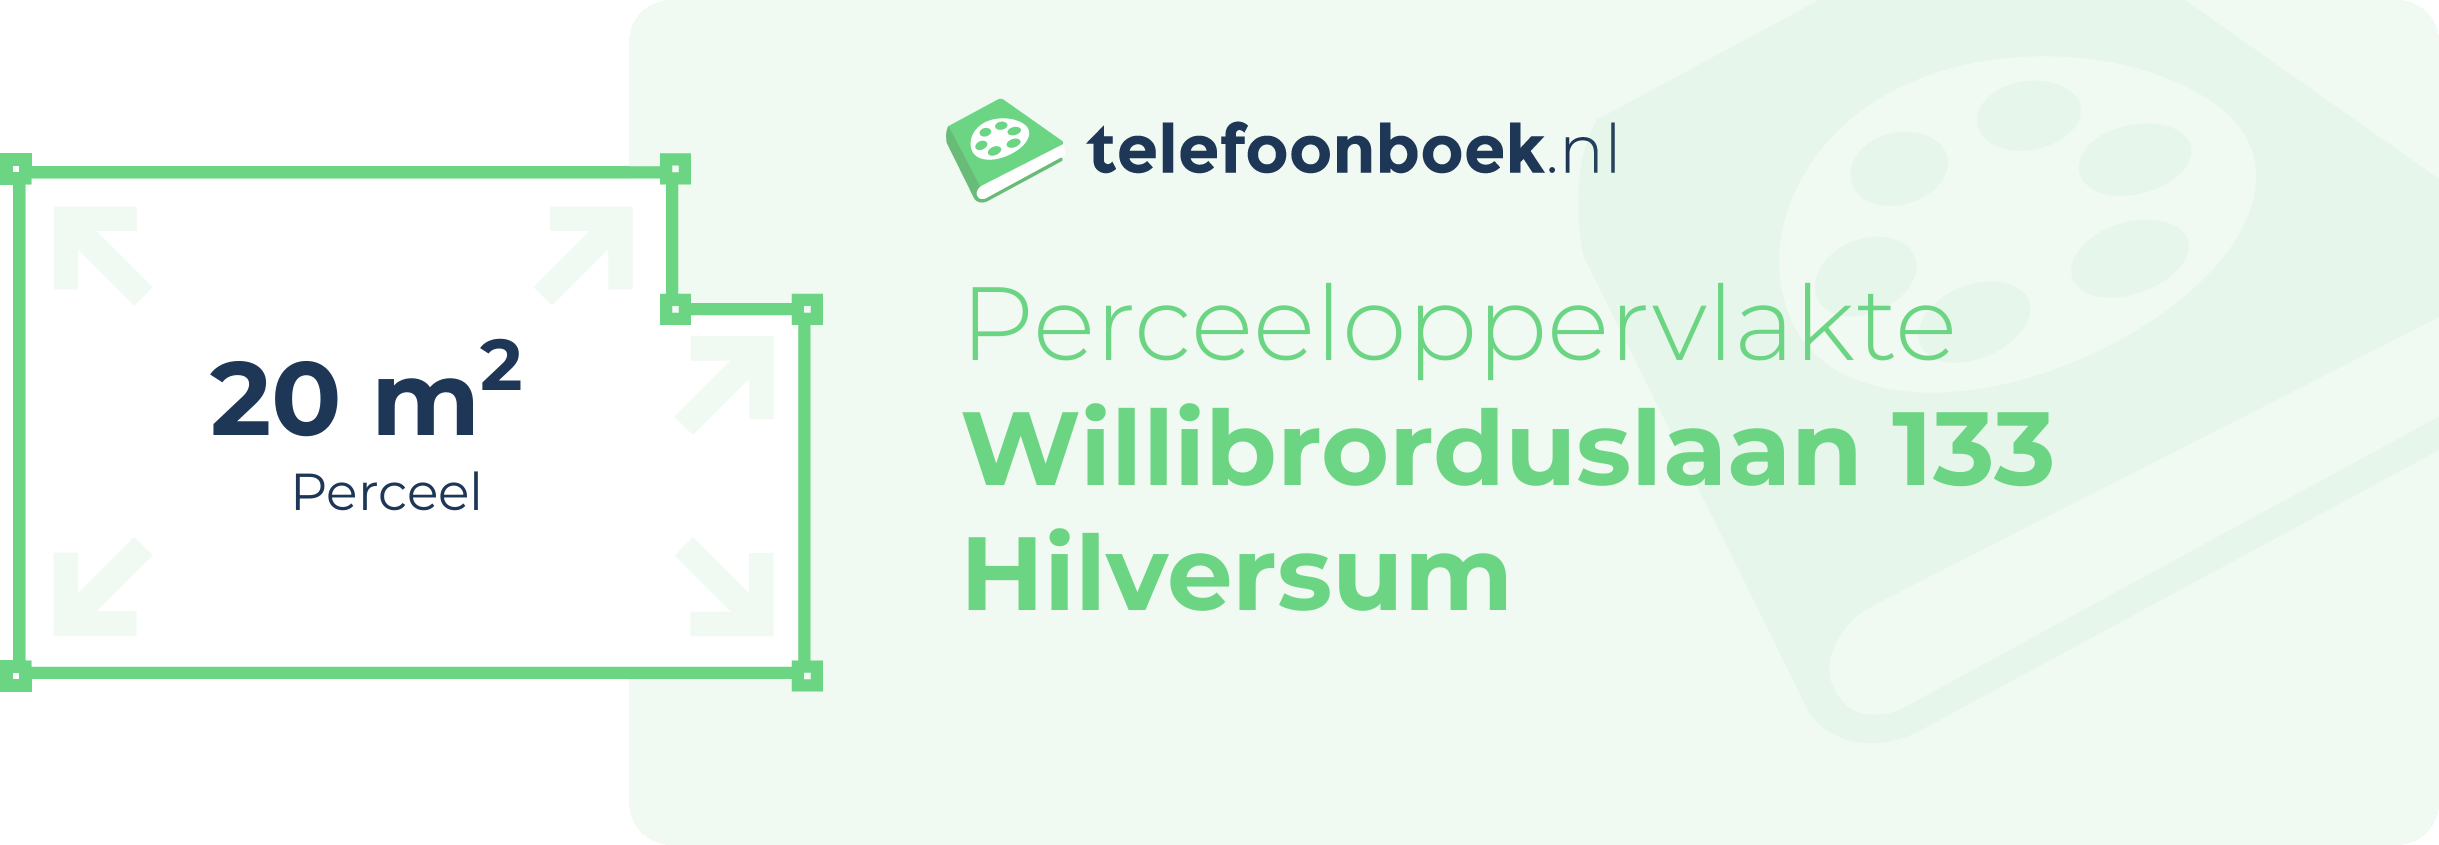 Perceeloppervlakte Willibrorduslaan 133 Hilversum